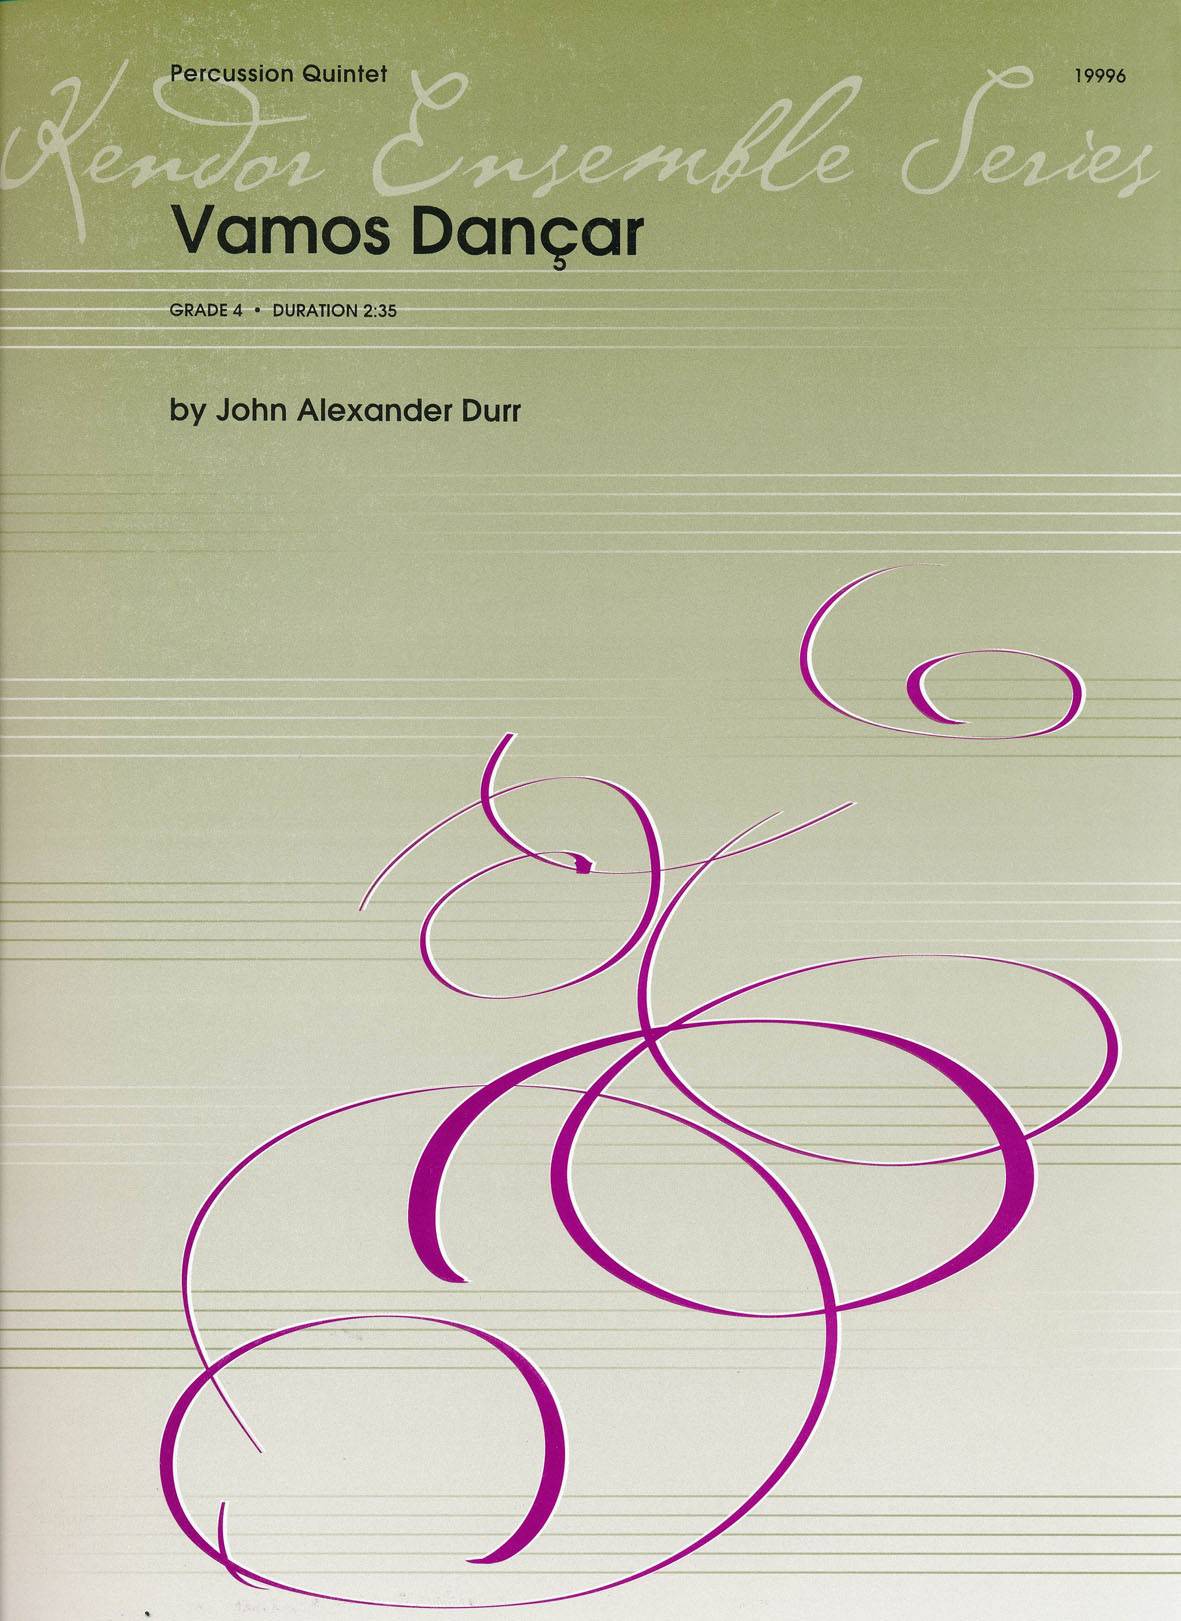 Vamos Dancar by John Alexander Durr